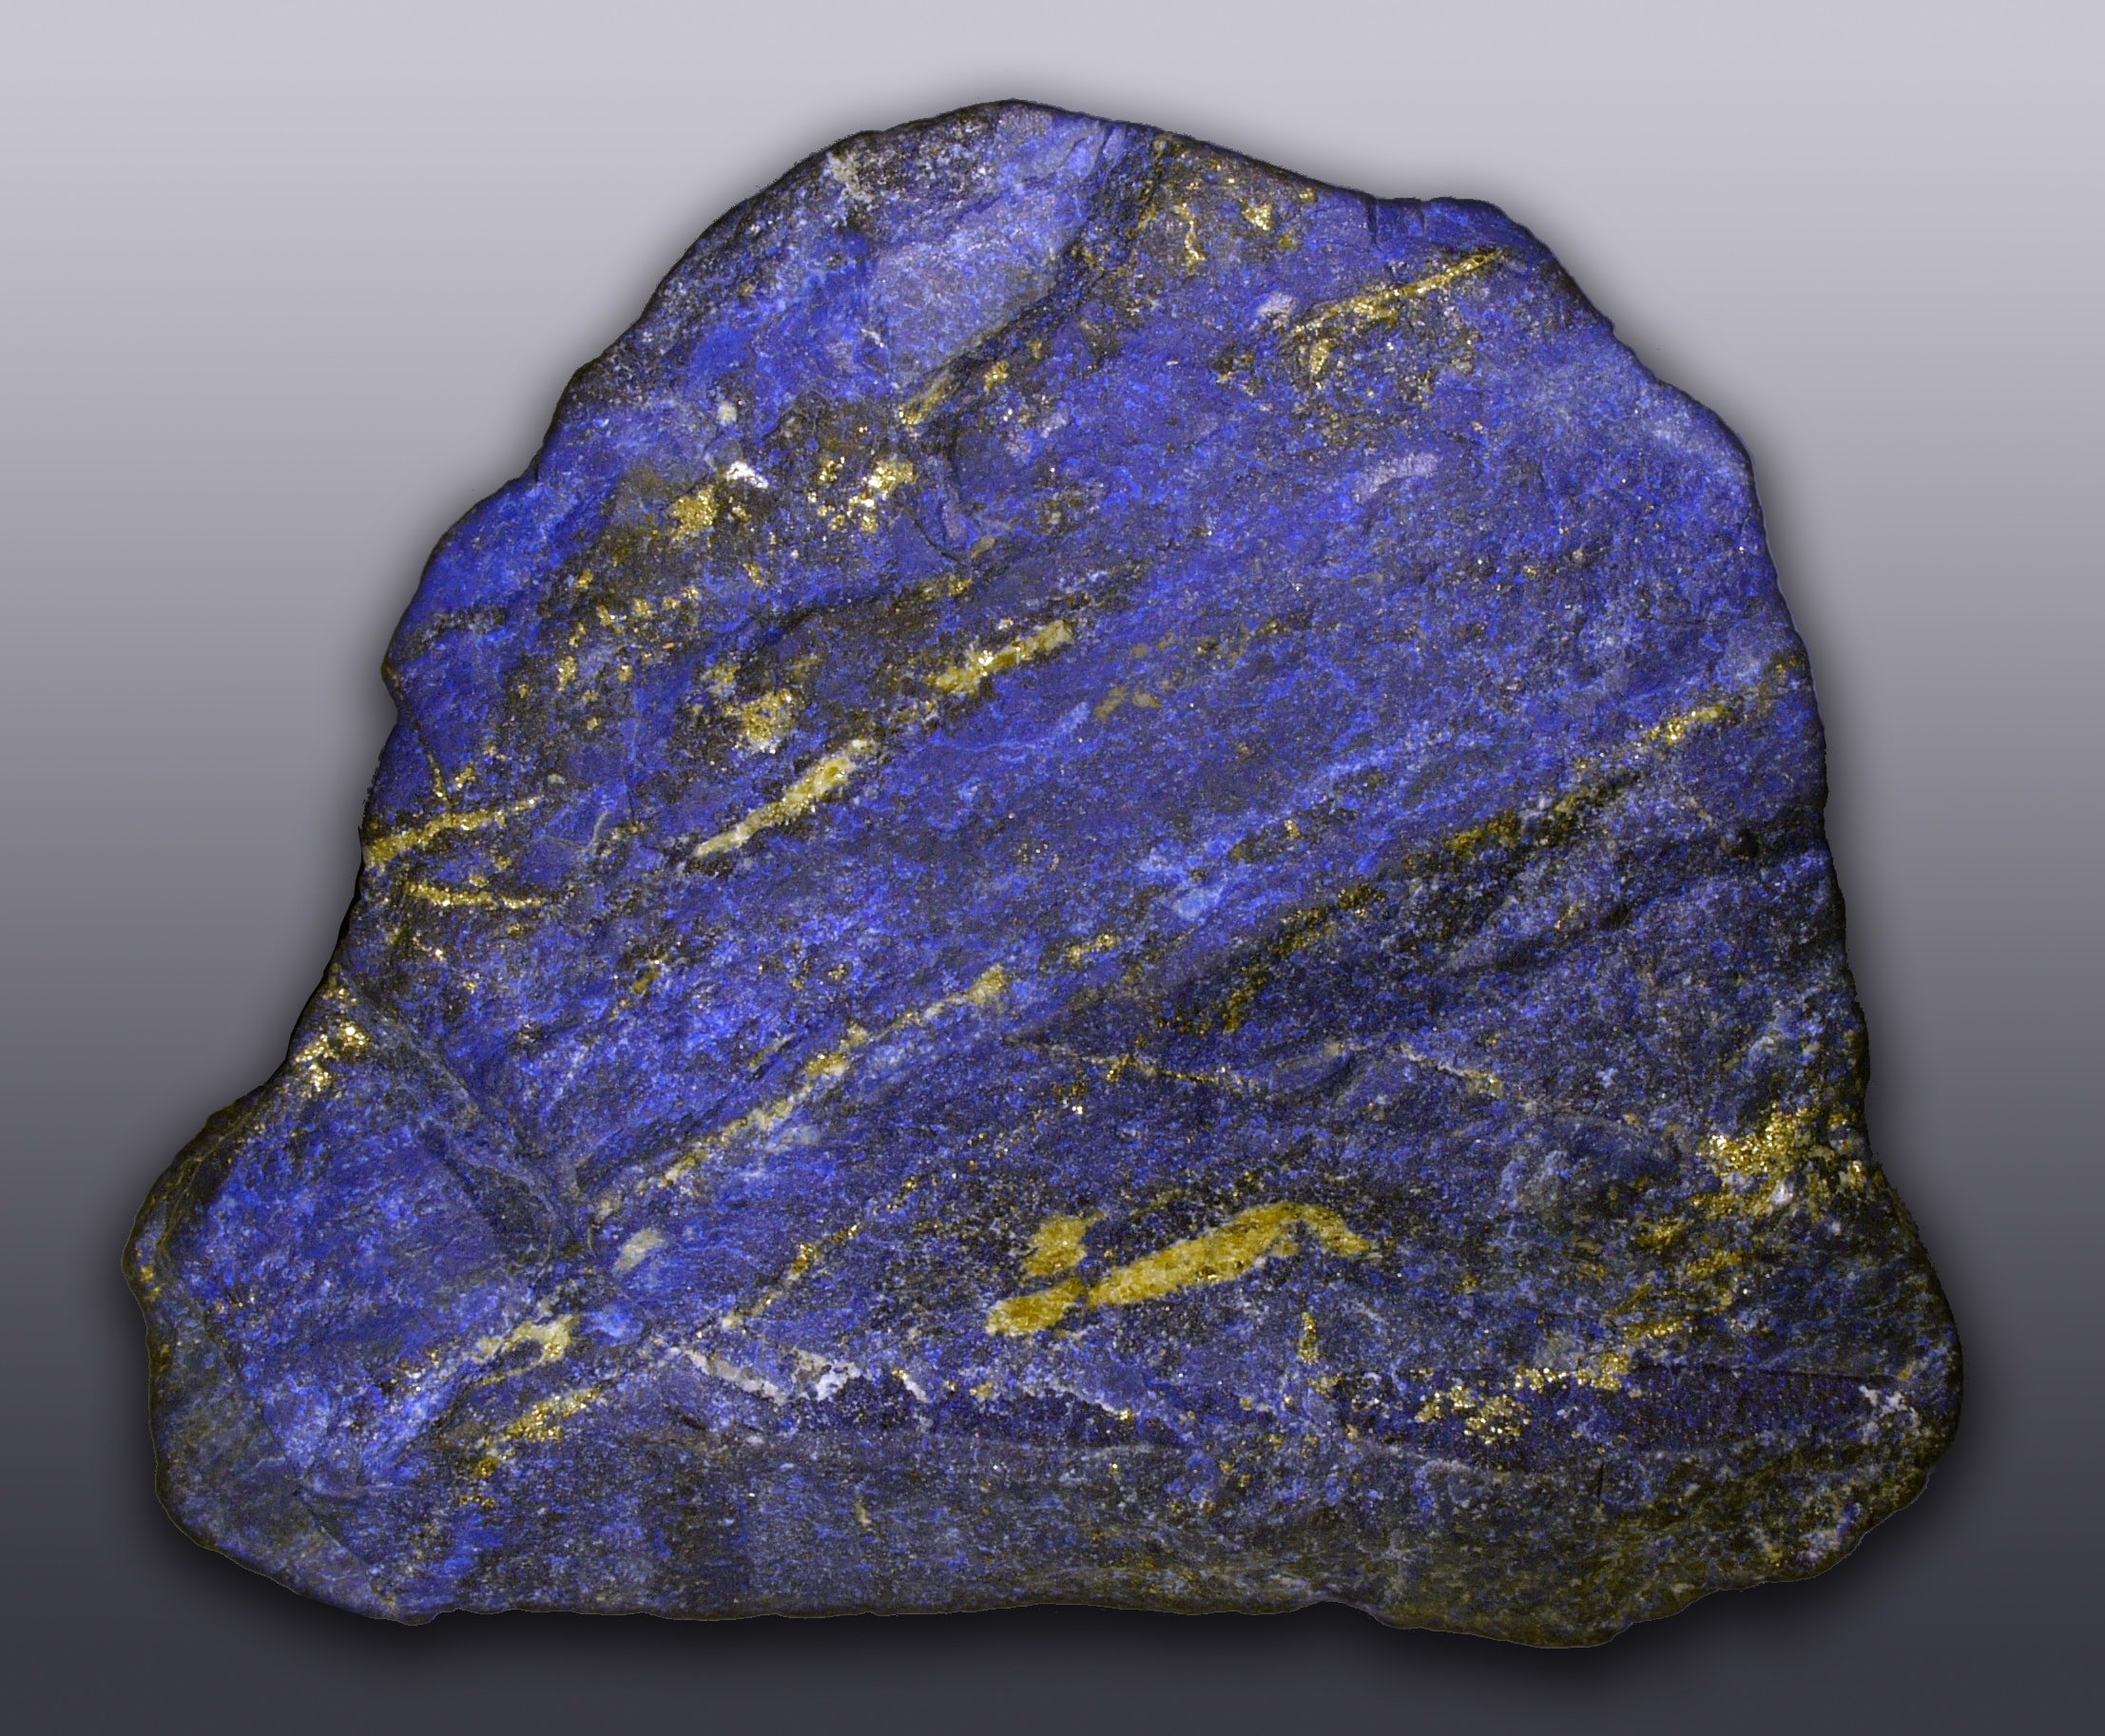 A piece of Lapis Lazuli